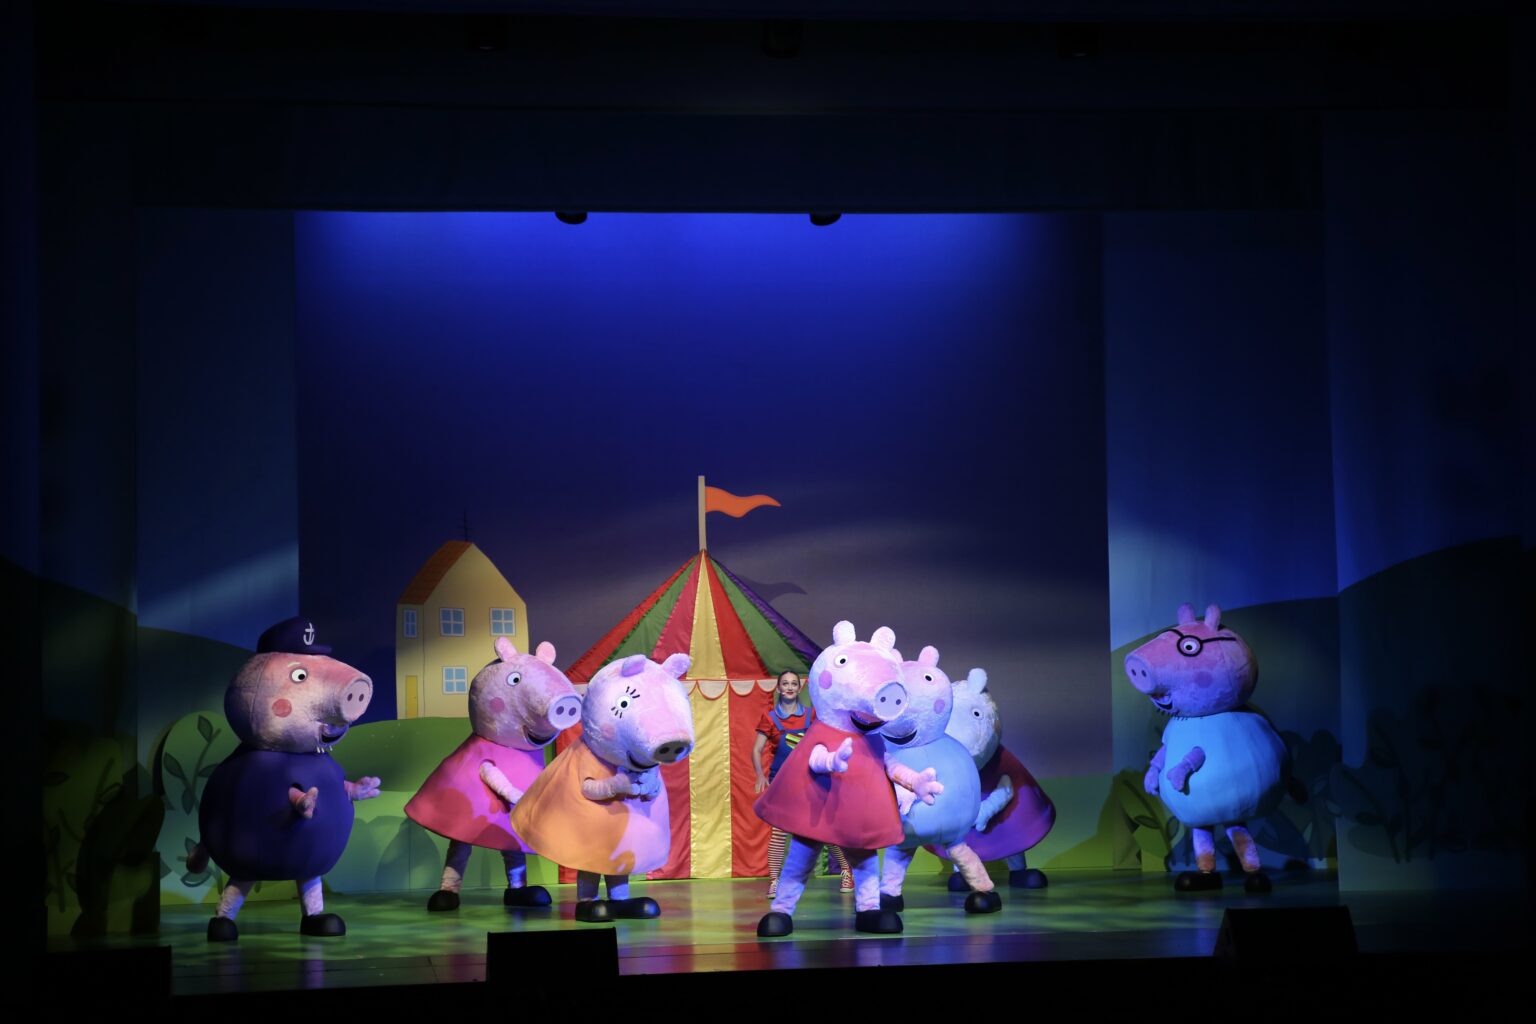 Peppa Pig Live musical show returns to Hong Kong 2023